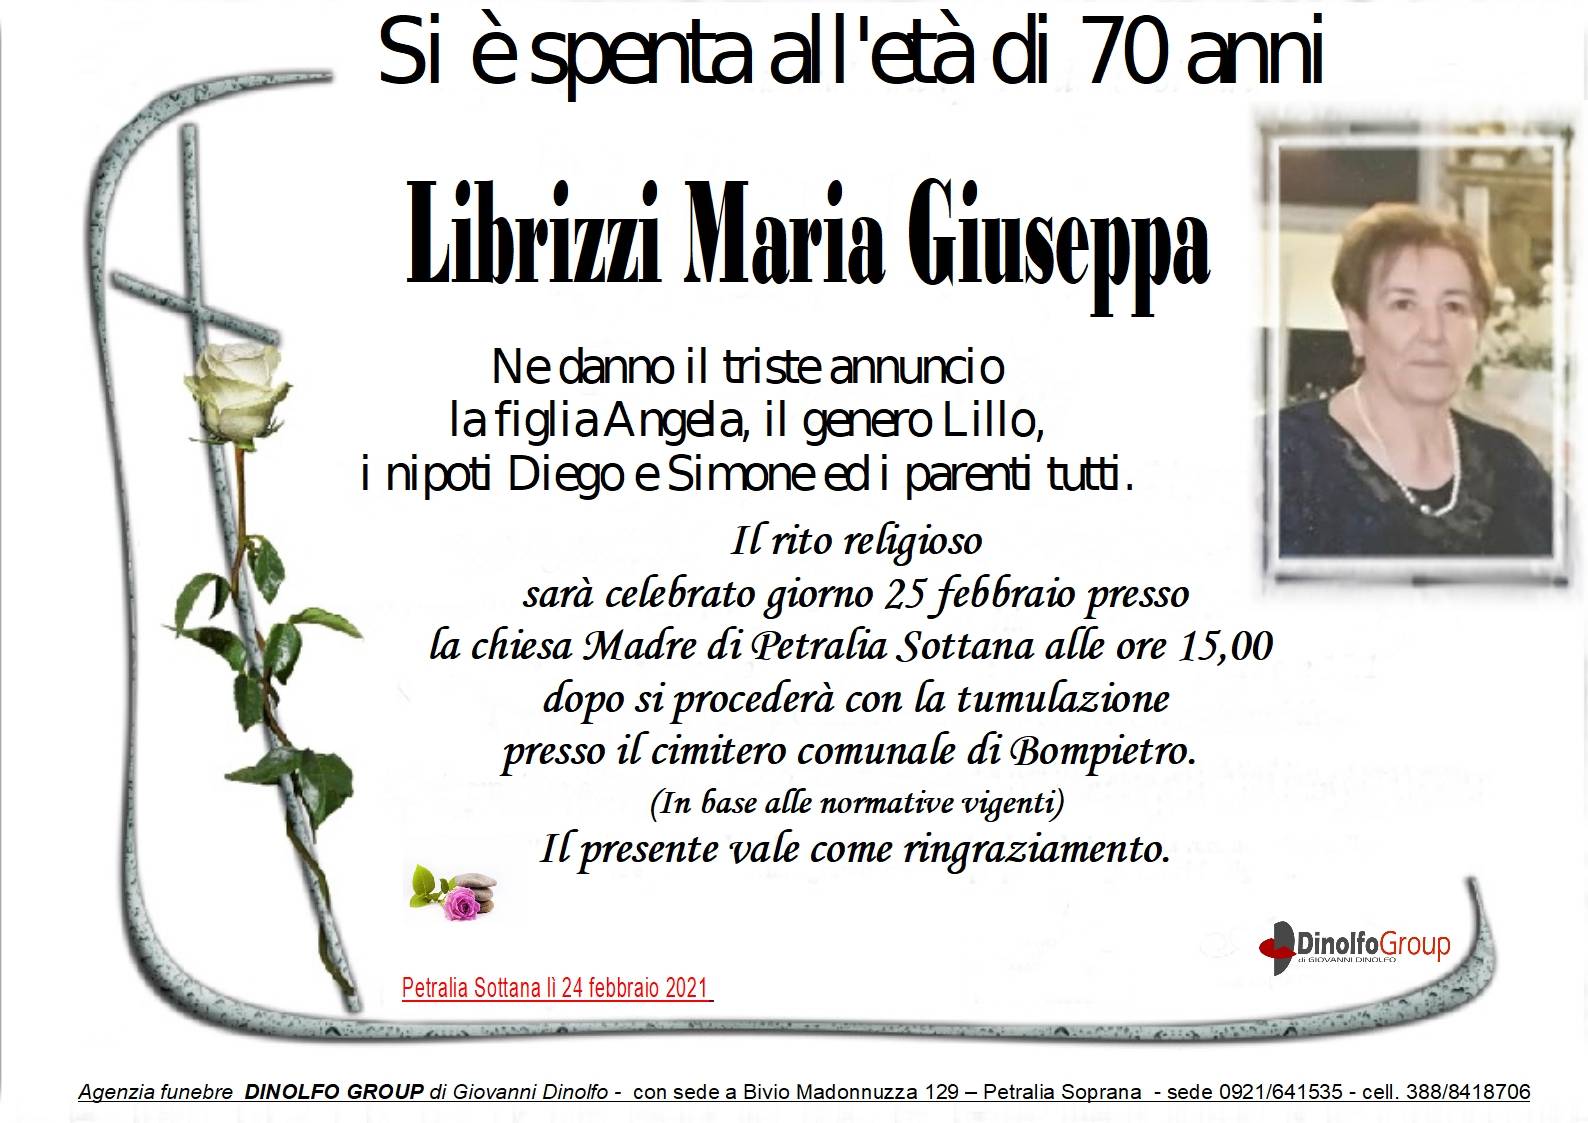 Maria Giuseppa Librizzi